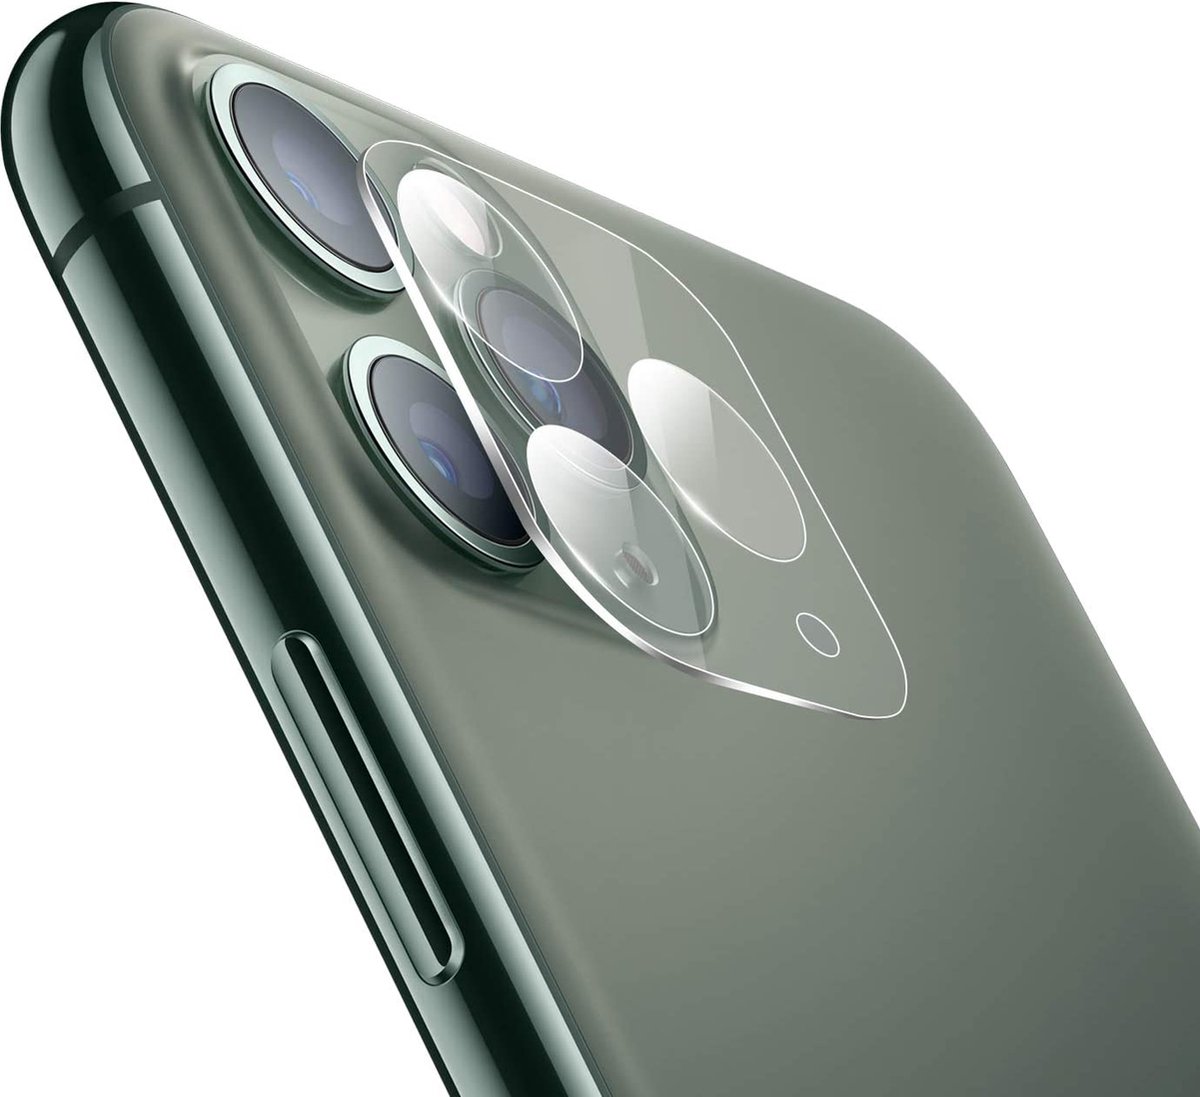 Camera lens protector iPhone 11 Pro Max - Beschermglas iPhone - Tempered Glass Screenprotector - Bescherming telefoon